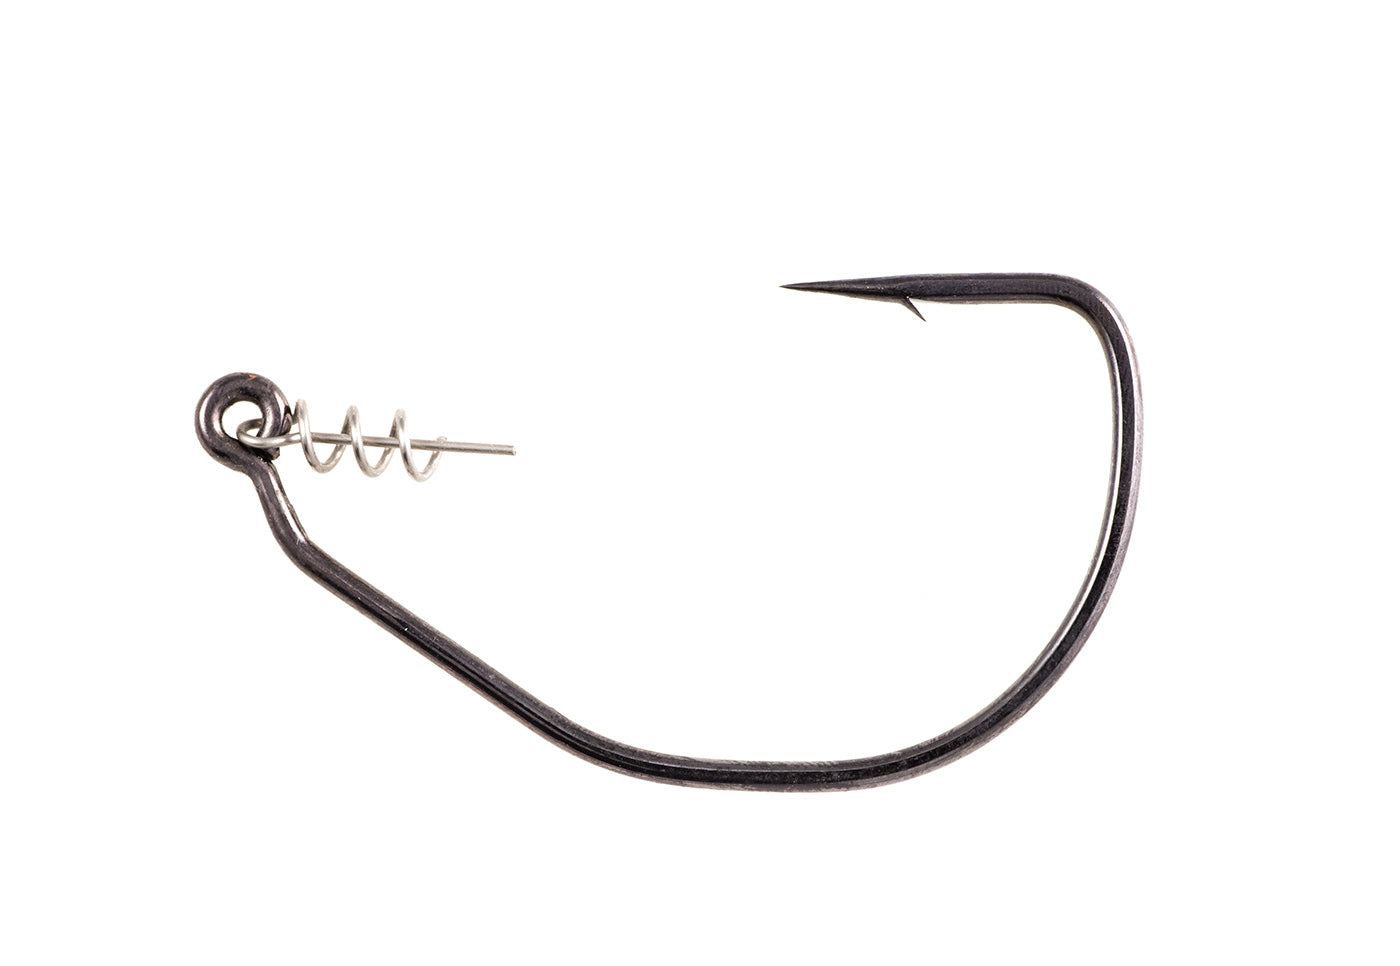 Owner - Beast Twistlock Hooks (5130)